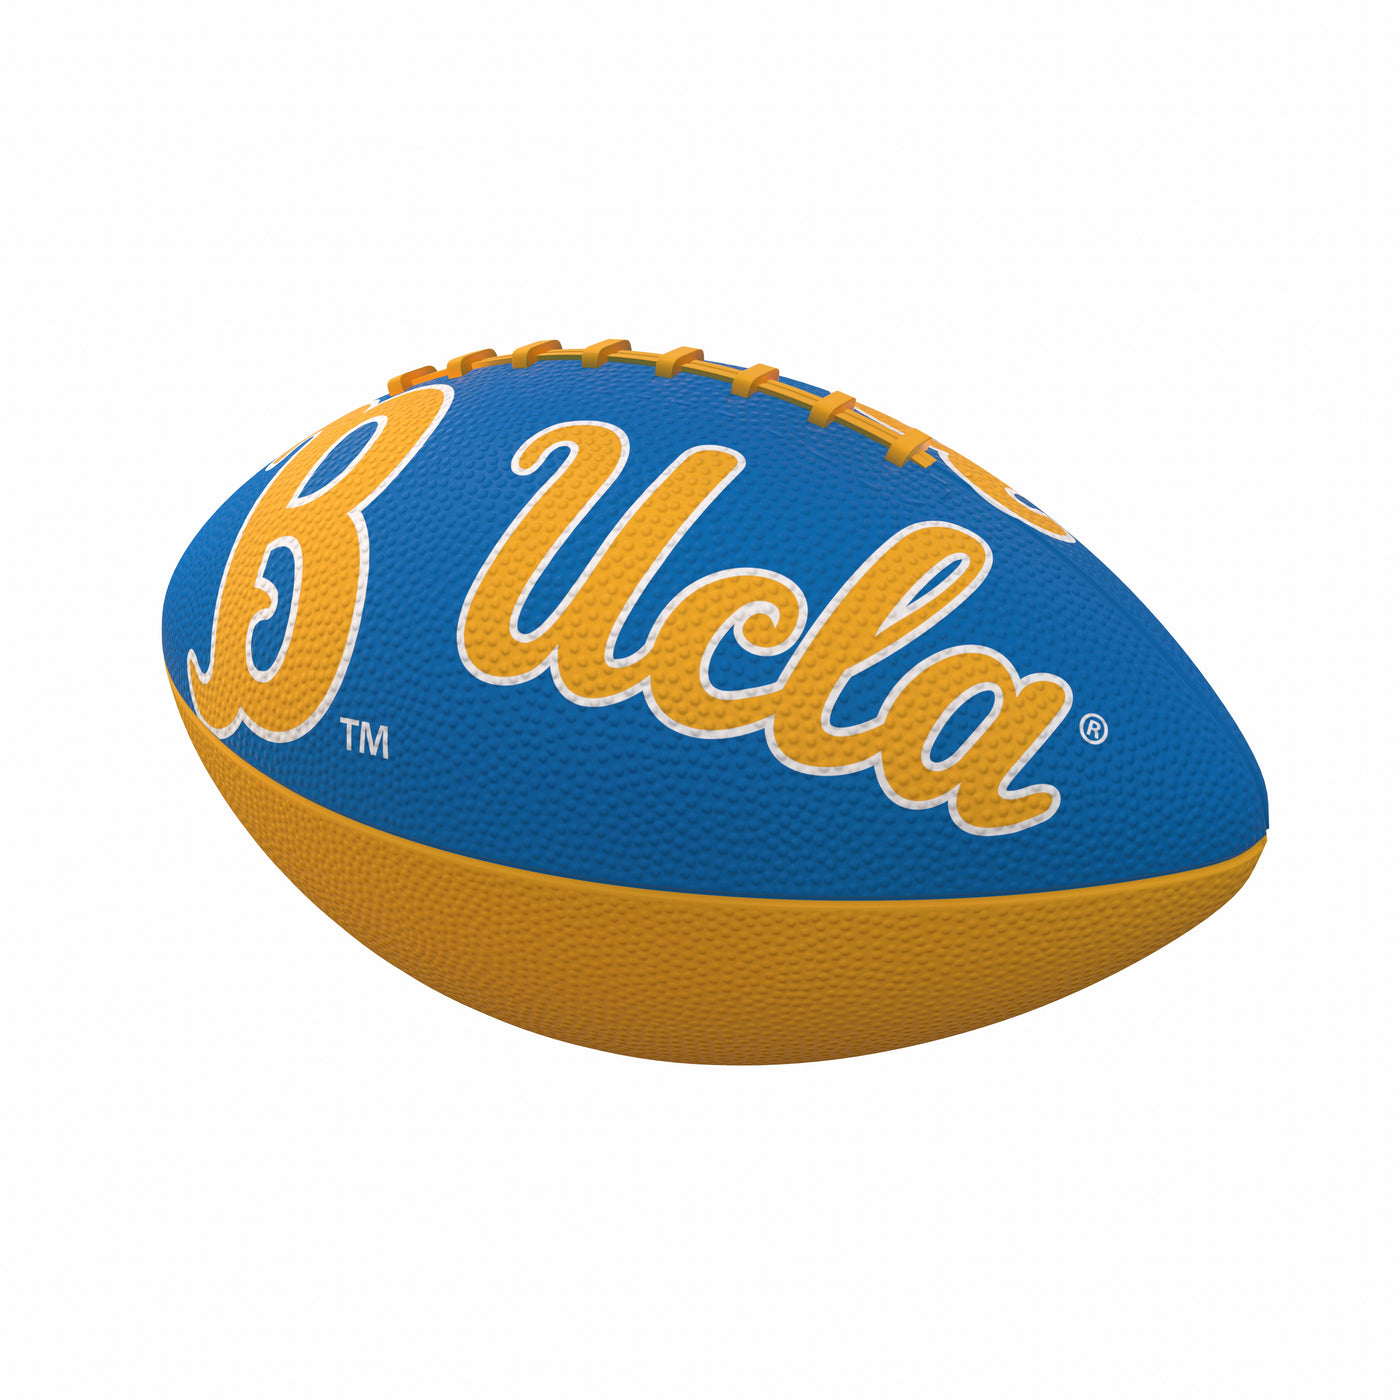 UCLA Combo Logo Junior-Size Rubber Football